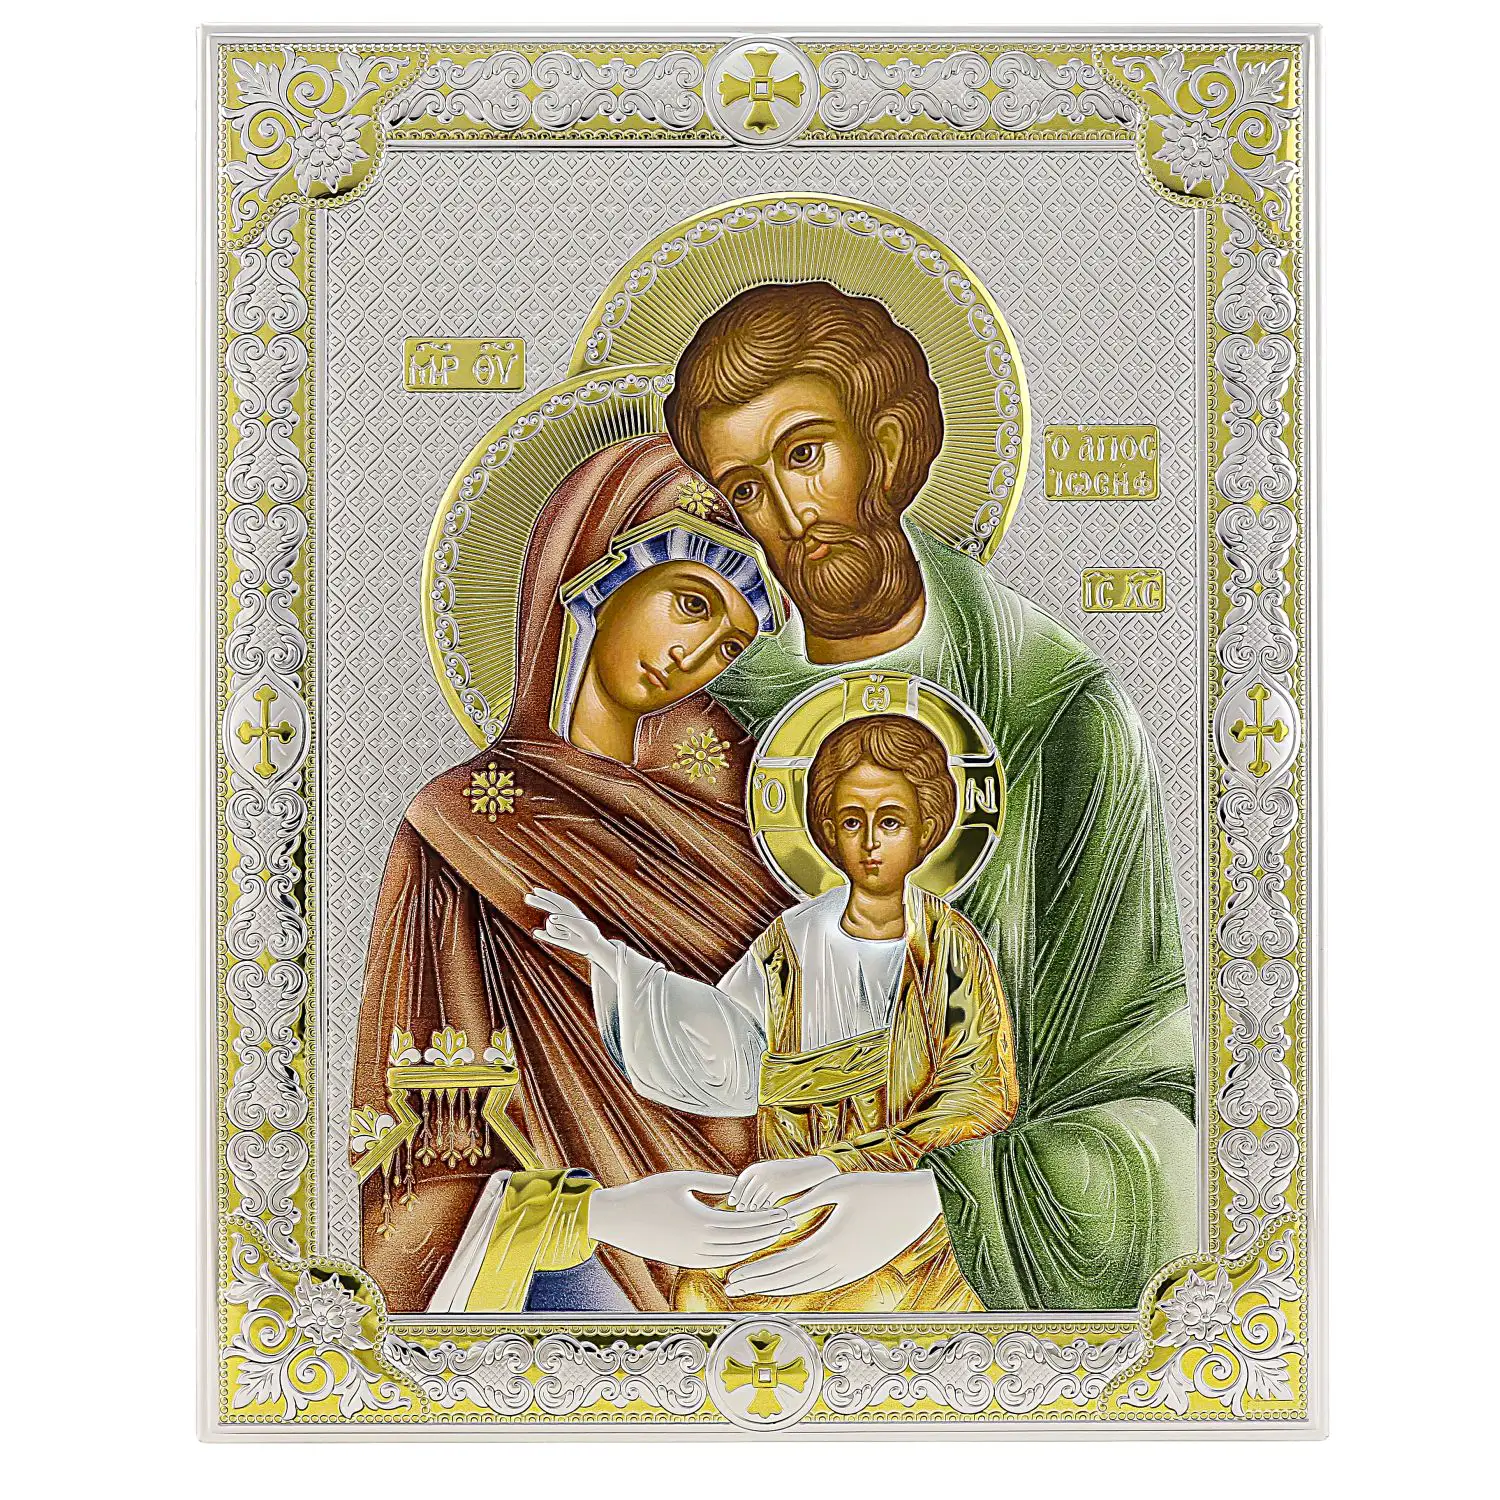 Икона Святое семейство (20 х 26) икона beltrami святое семейство 22 1 х 26 8 см